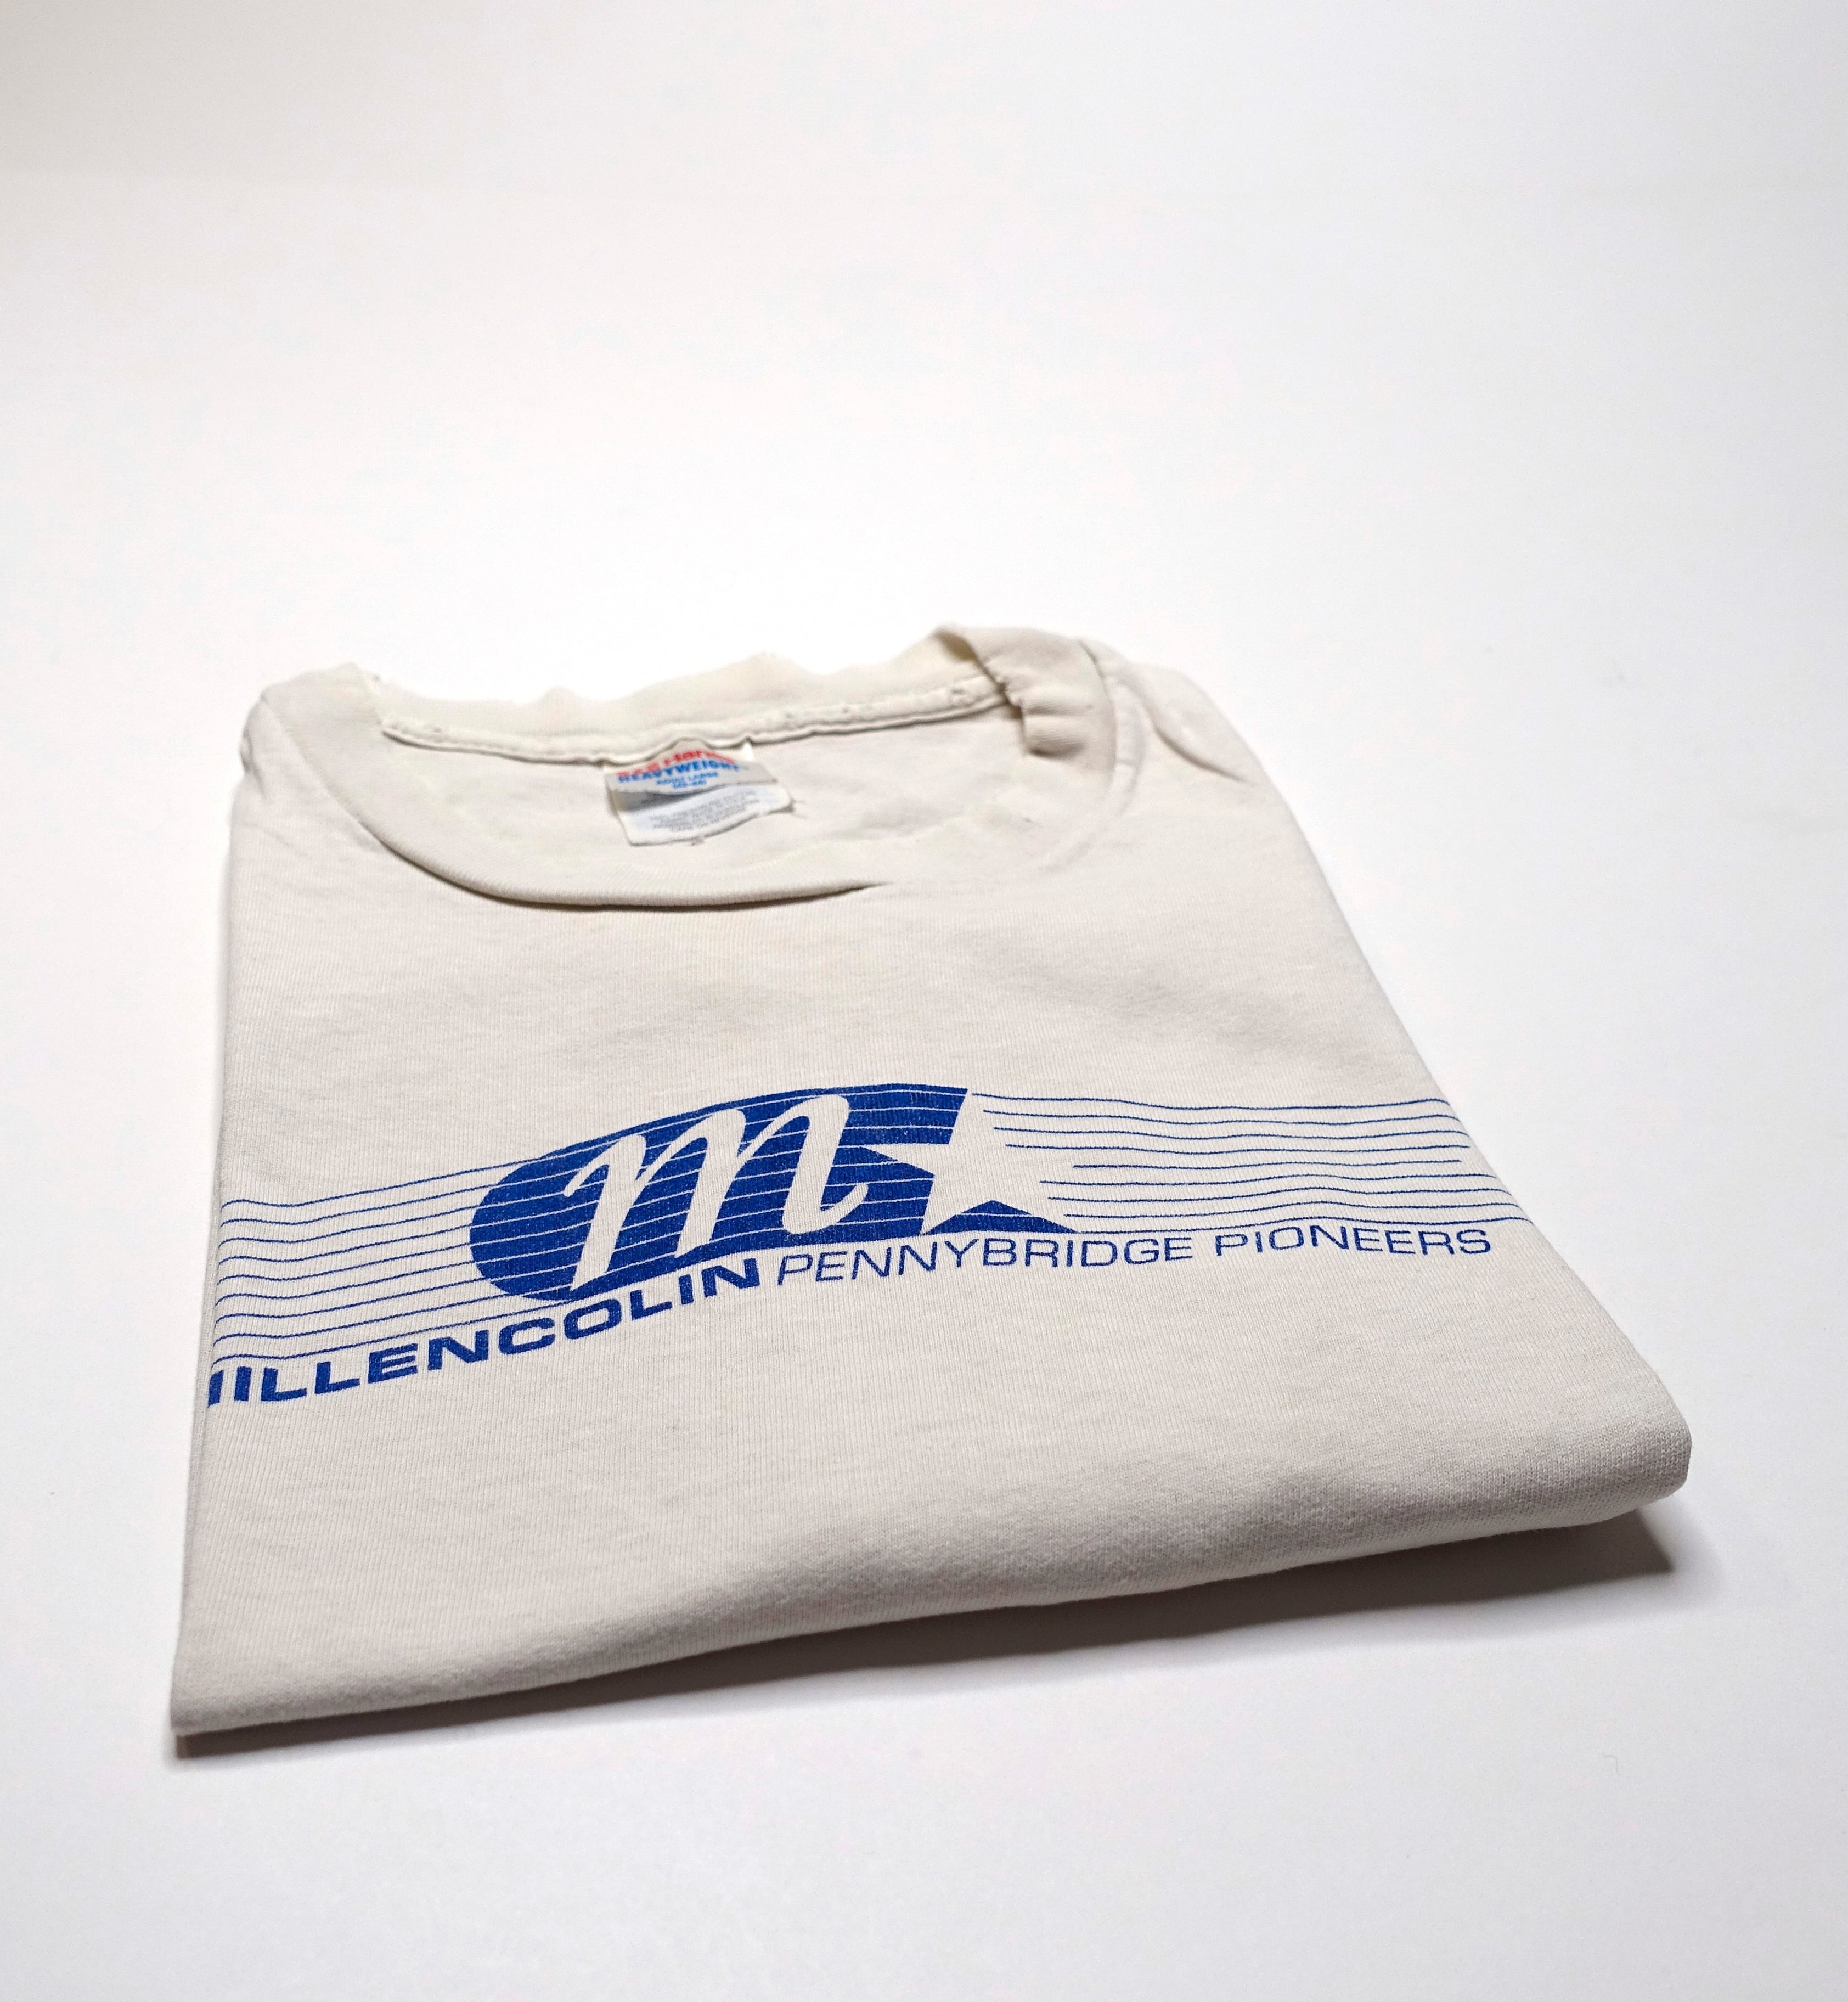 Millencolin - Pennybridge Pioneers 1999 Tour Shirt Size Large